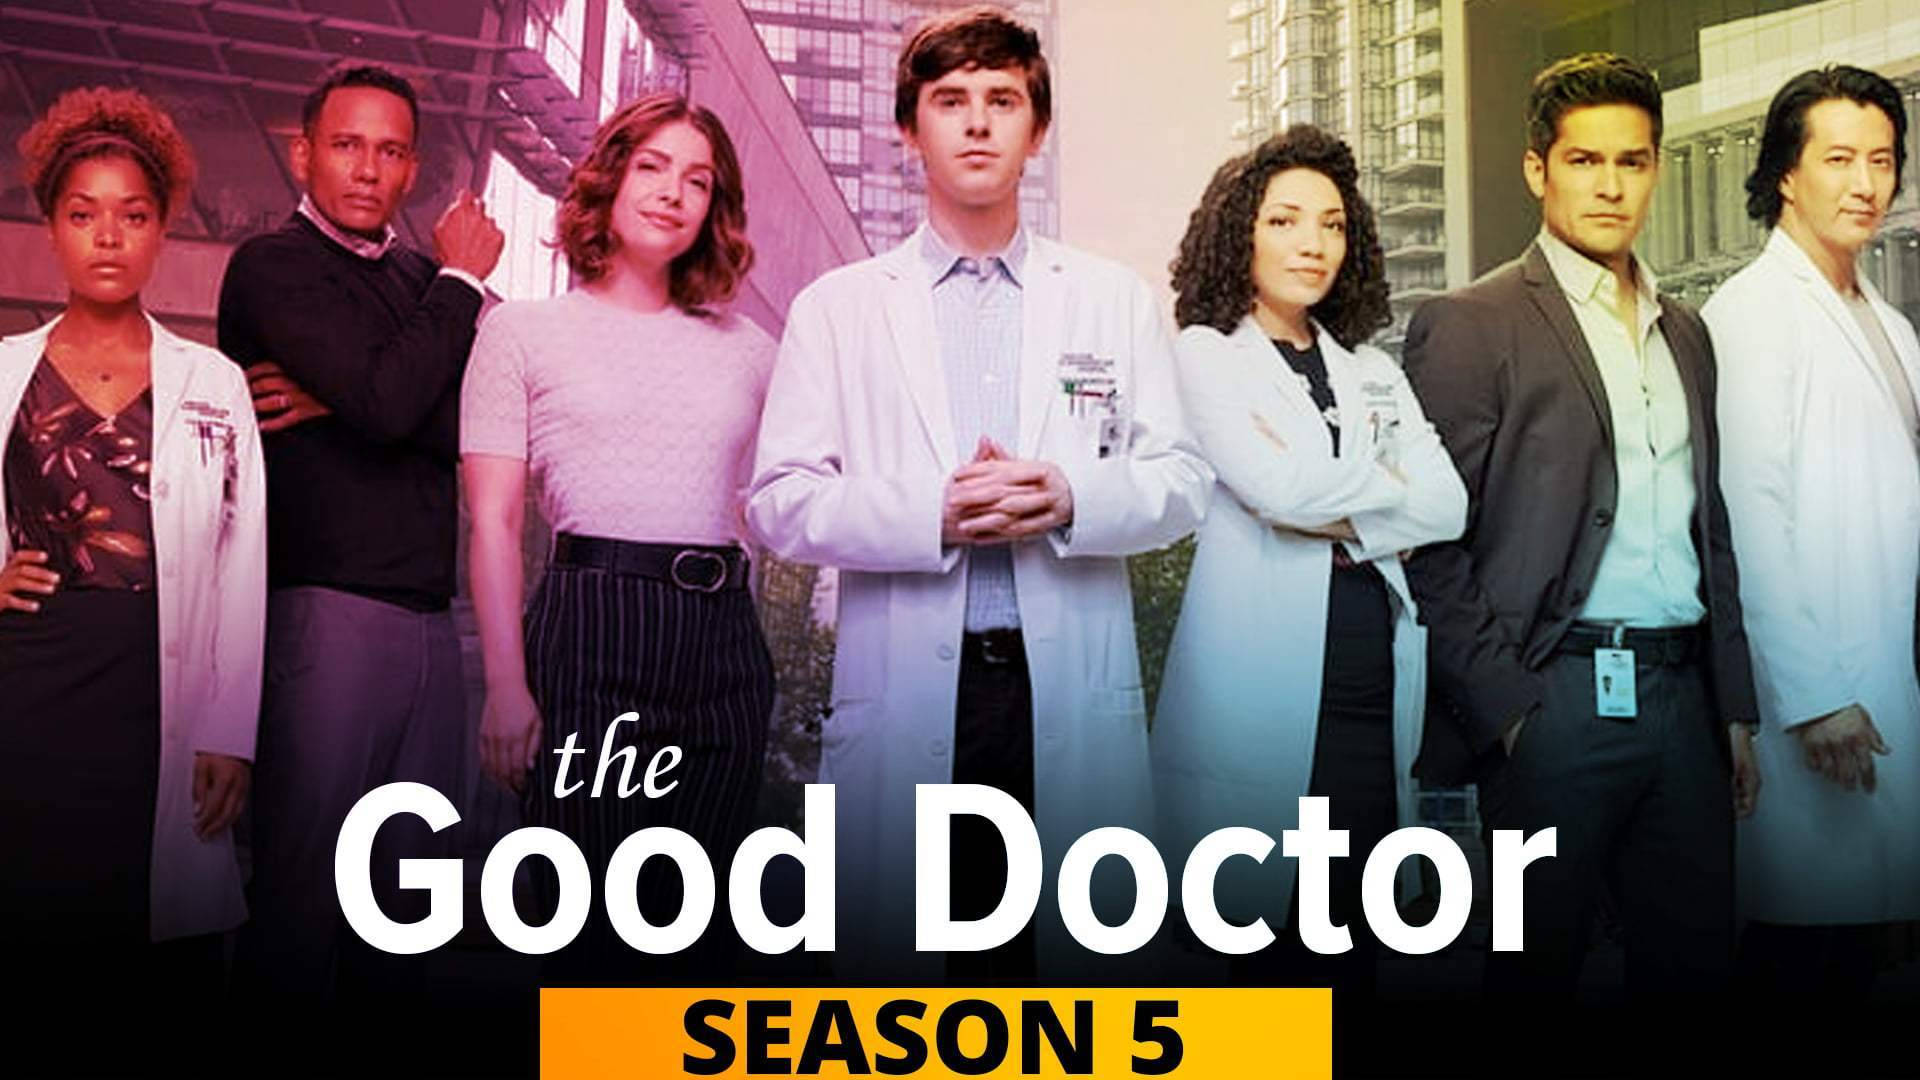 The Good Doctor Season 5 Background